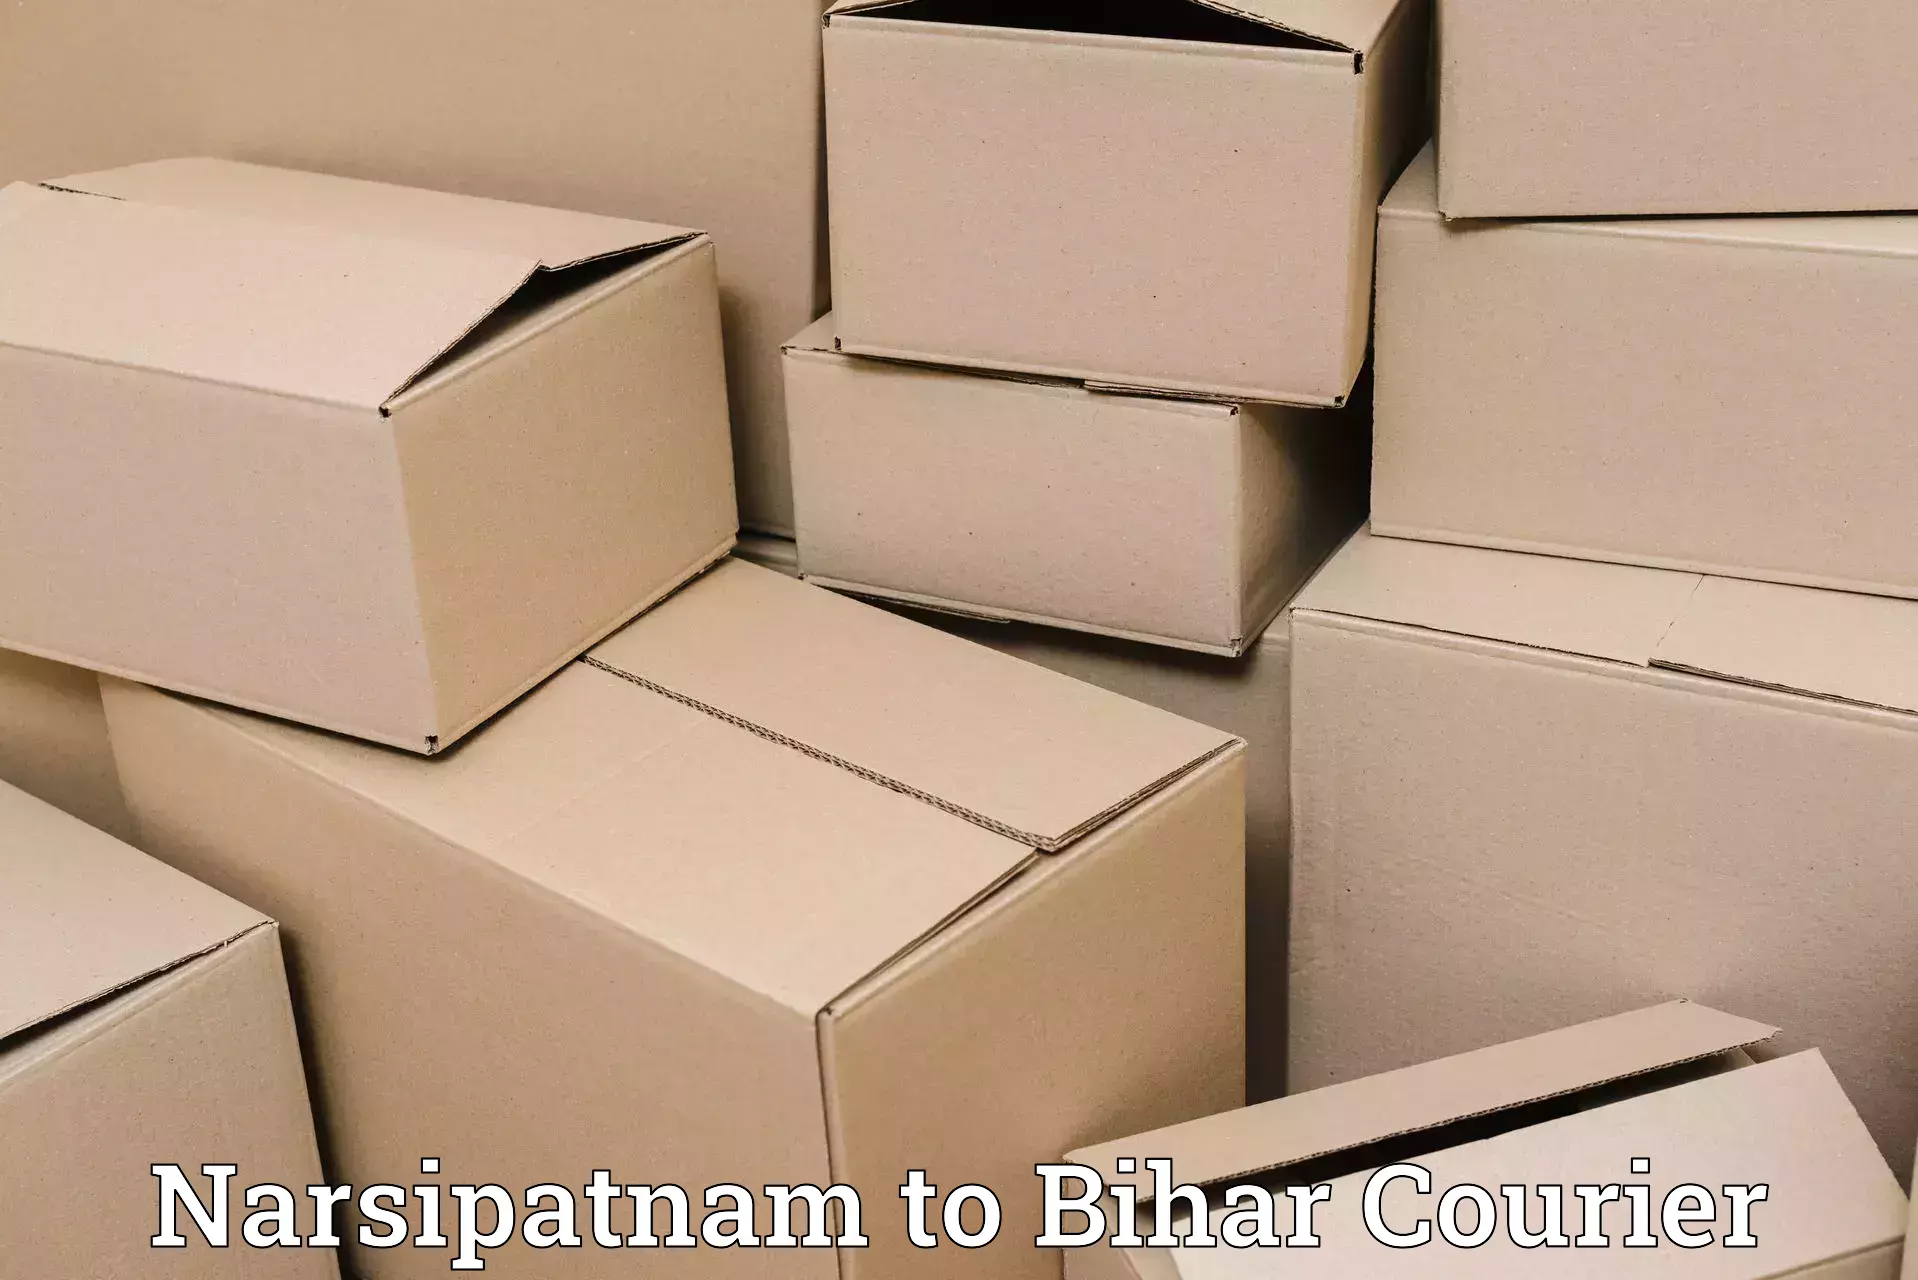 Courier service comparison Narsipatnam to Madhubani